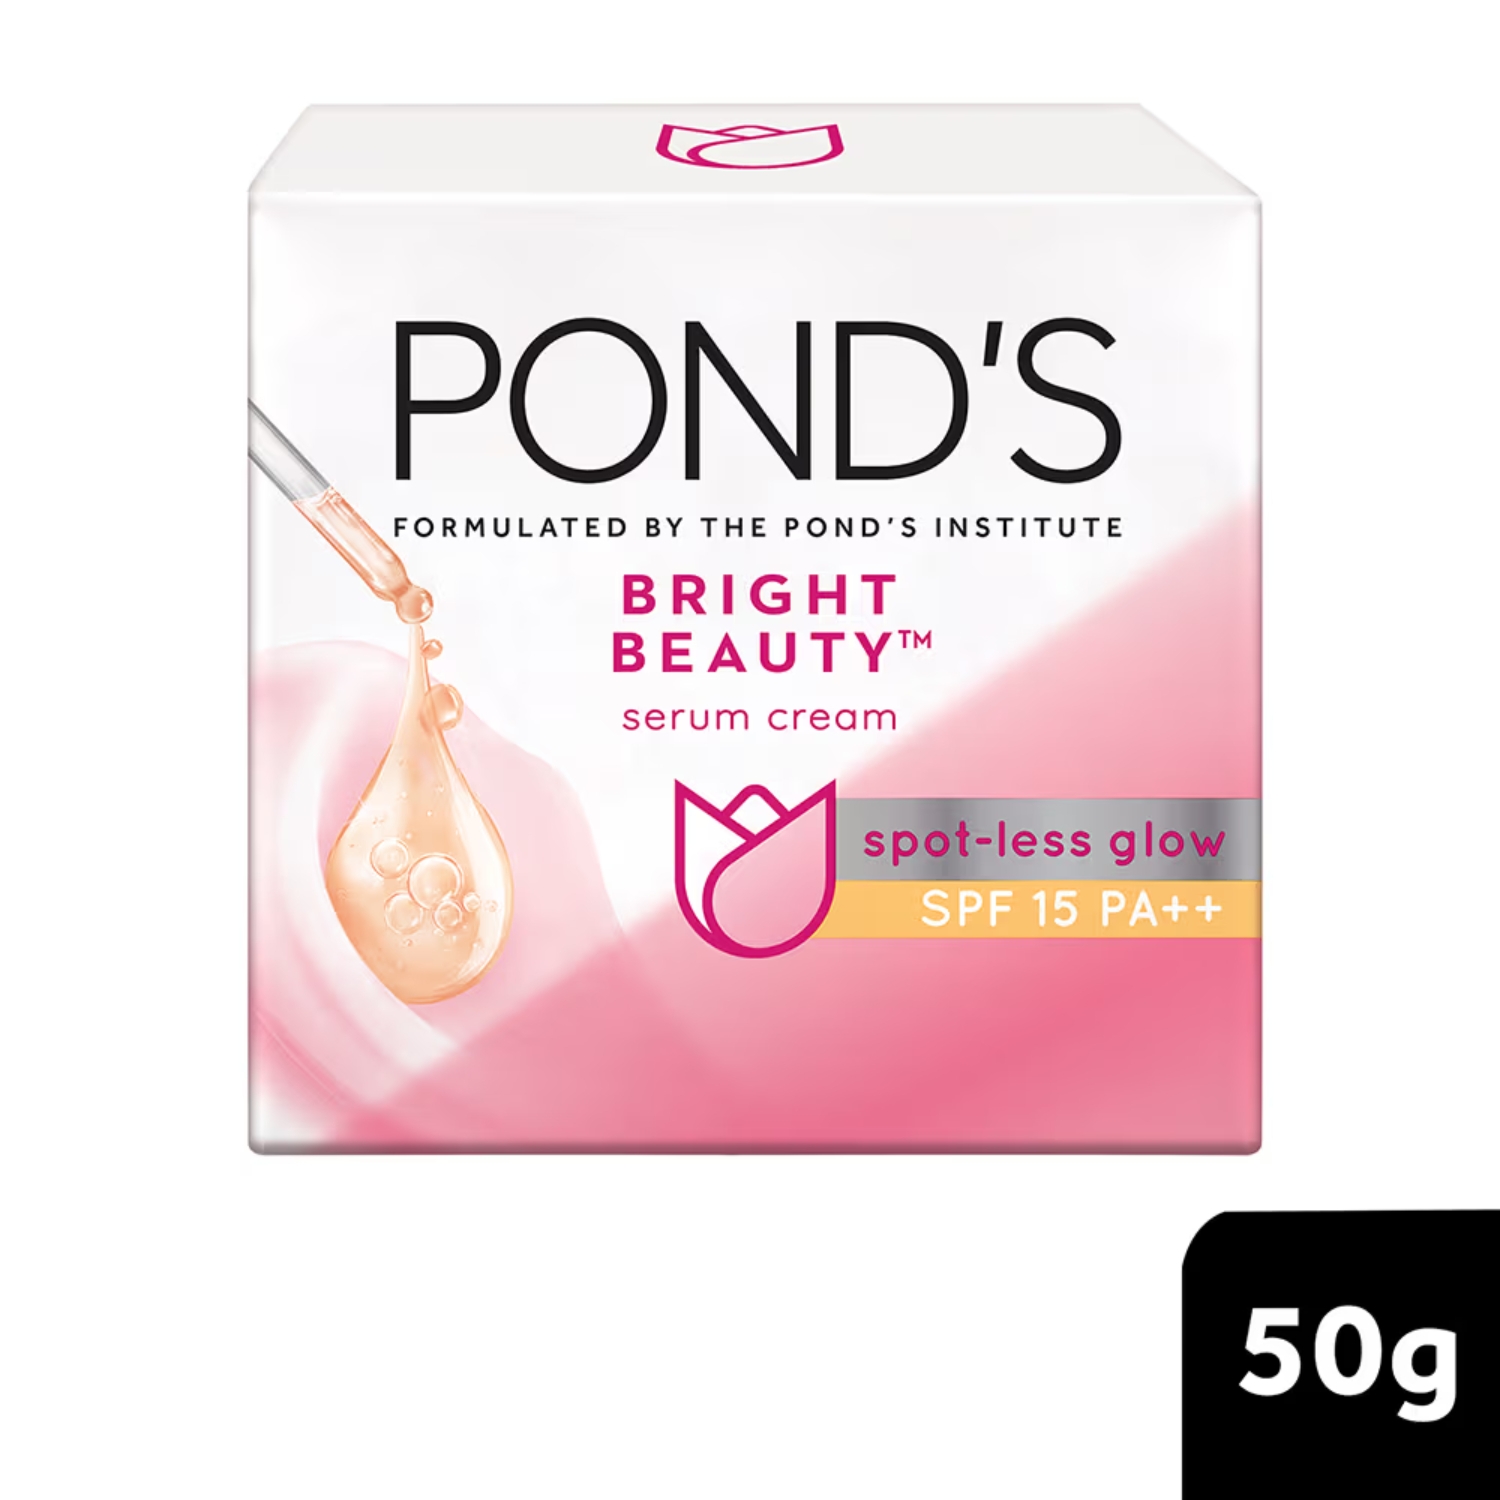 Pond's | Pond's Bright Beauty SPF 15 PA++ Spot-Less Glow Serum Cream (50g)